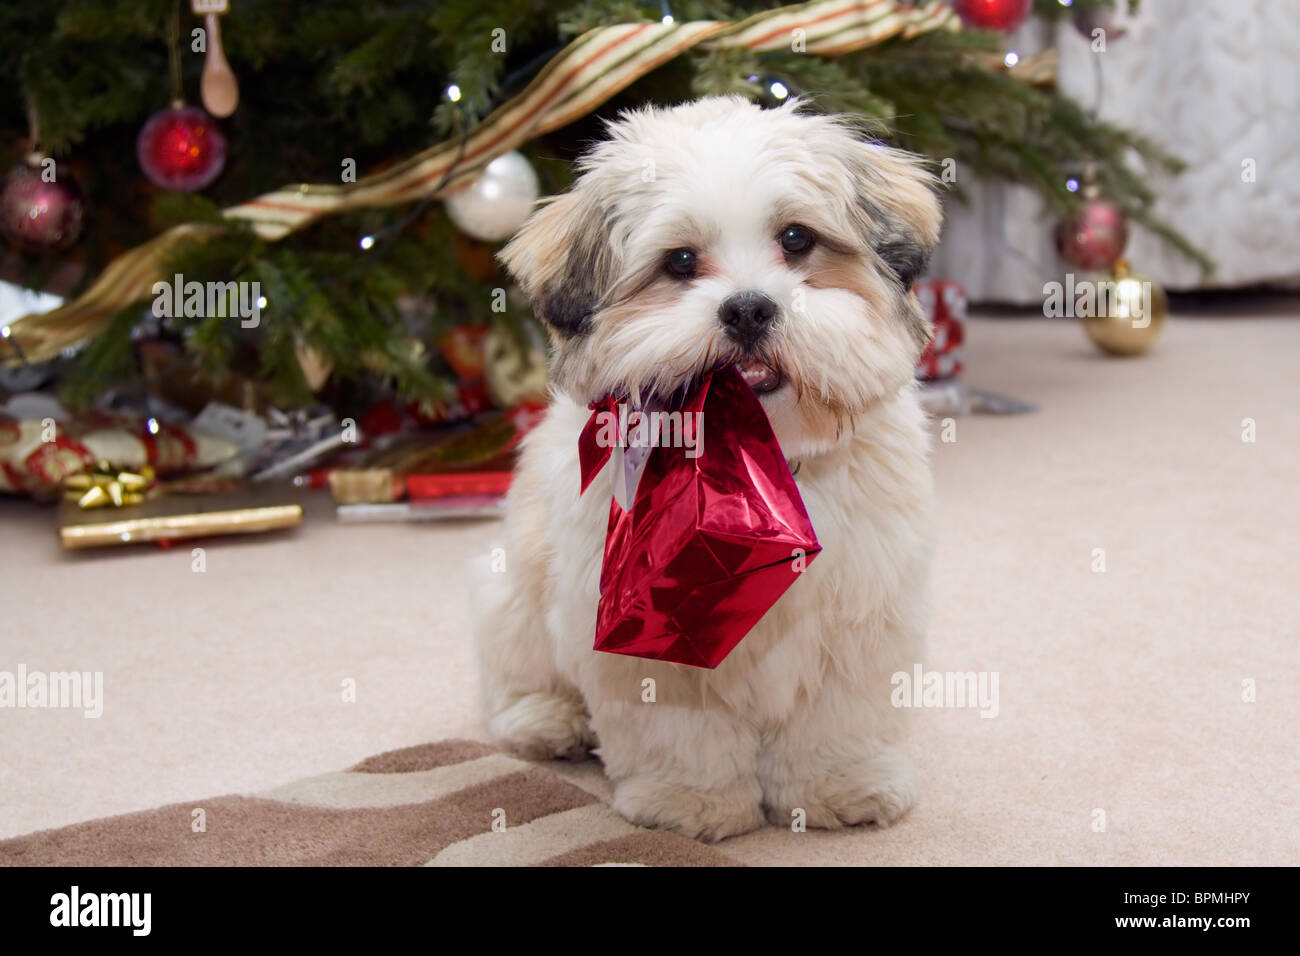 https://c8.alamy.com/comp/BPMHPY/lhasa-apso-puppy-at-christmas-BPMHPY.jpg